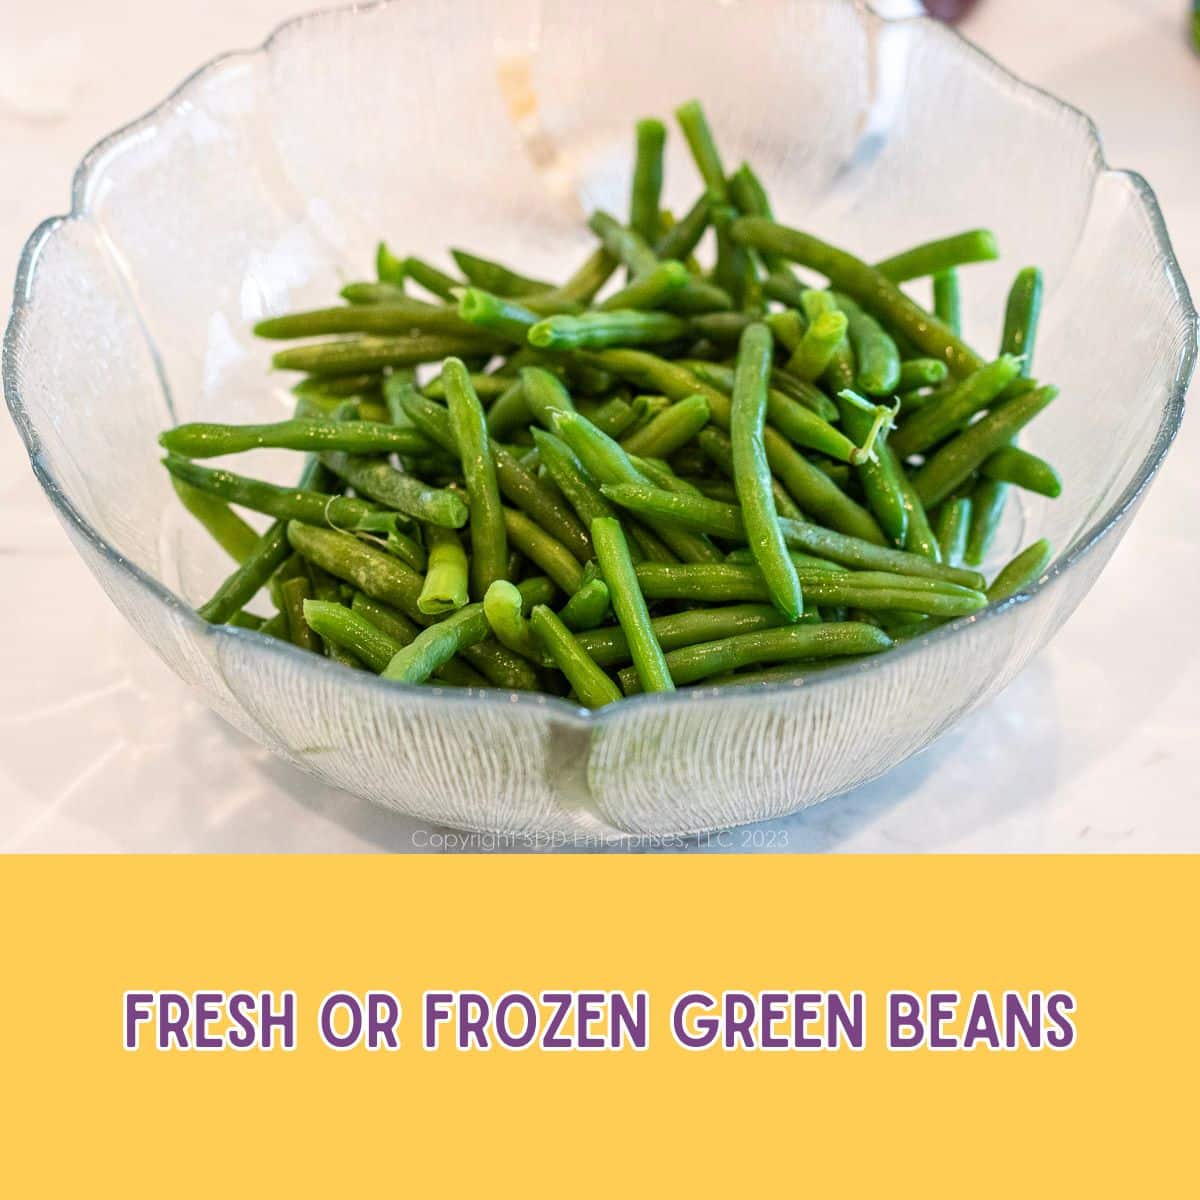 Fresh green beans in a glass bowl. 